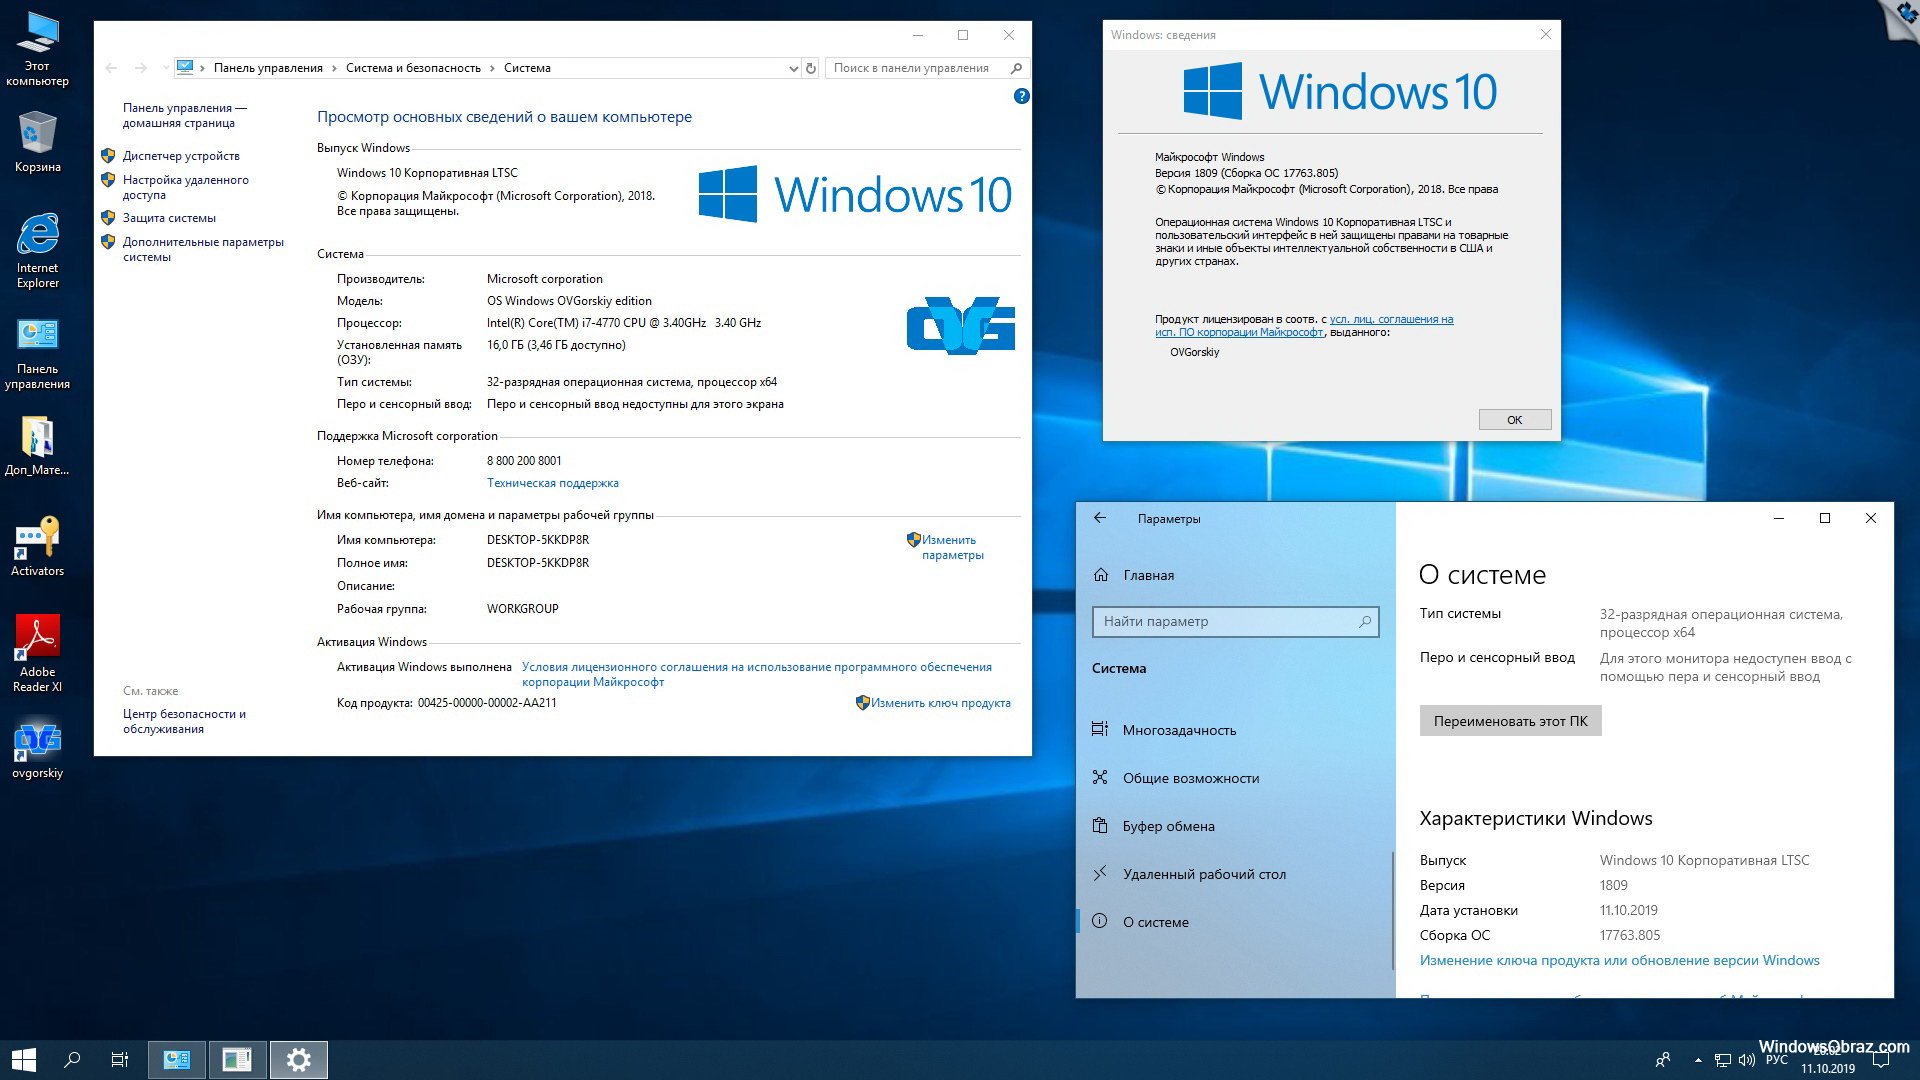 Kak windows 10. Windows 10 Enterprise корпоративная) 64 bit. ОС: 64-битная Windows 10. Операционная система Windows 10 Pro. Microsoft Windows 10 Enterprise LTSC 2019 1809.